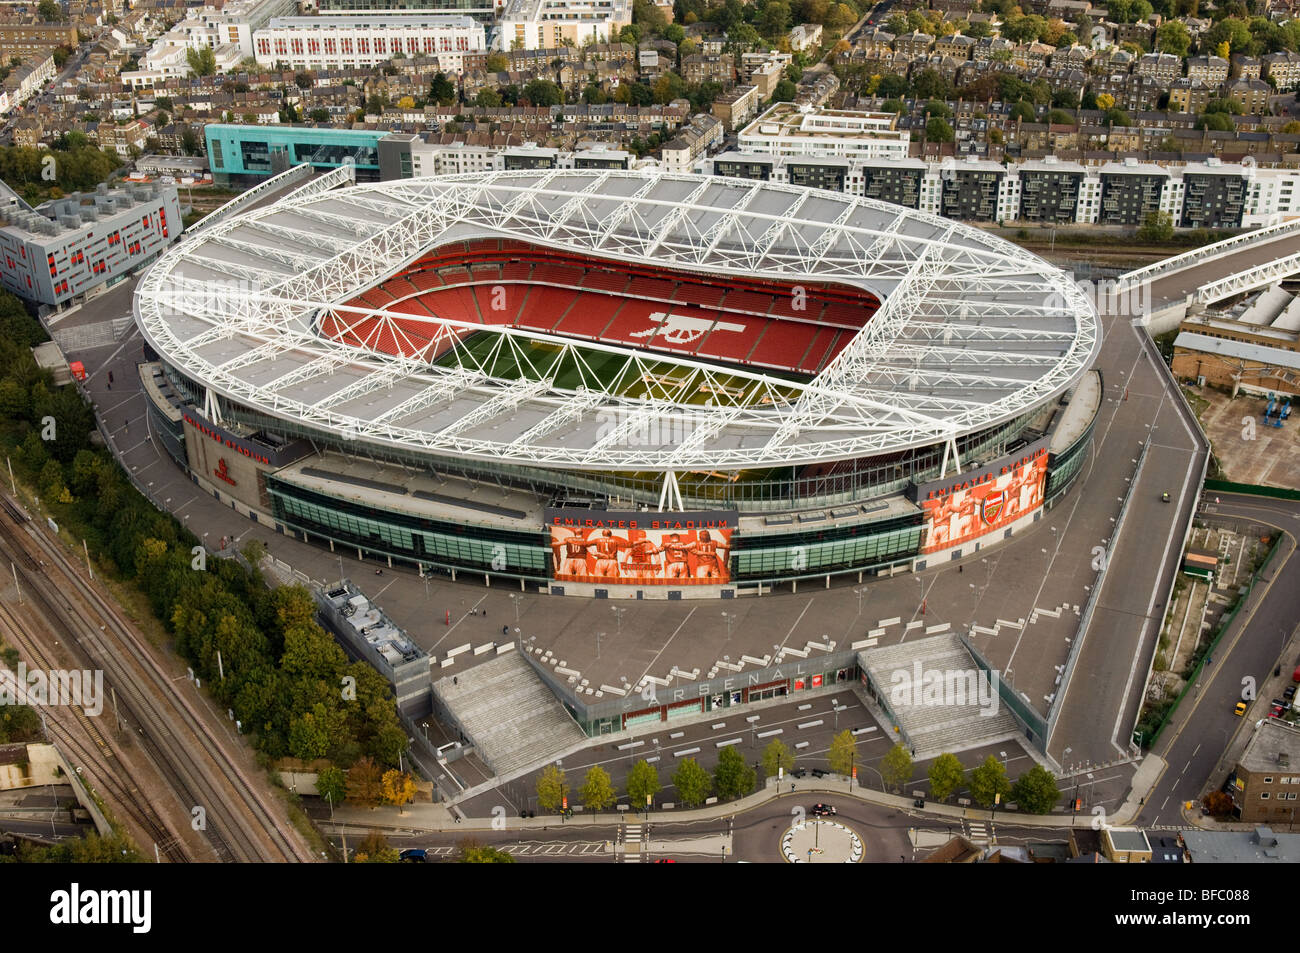 Die Emirates Fußball Stadion London beheimatet den Arsenal Football Club  Stockfotografie - Alamy